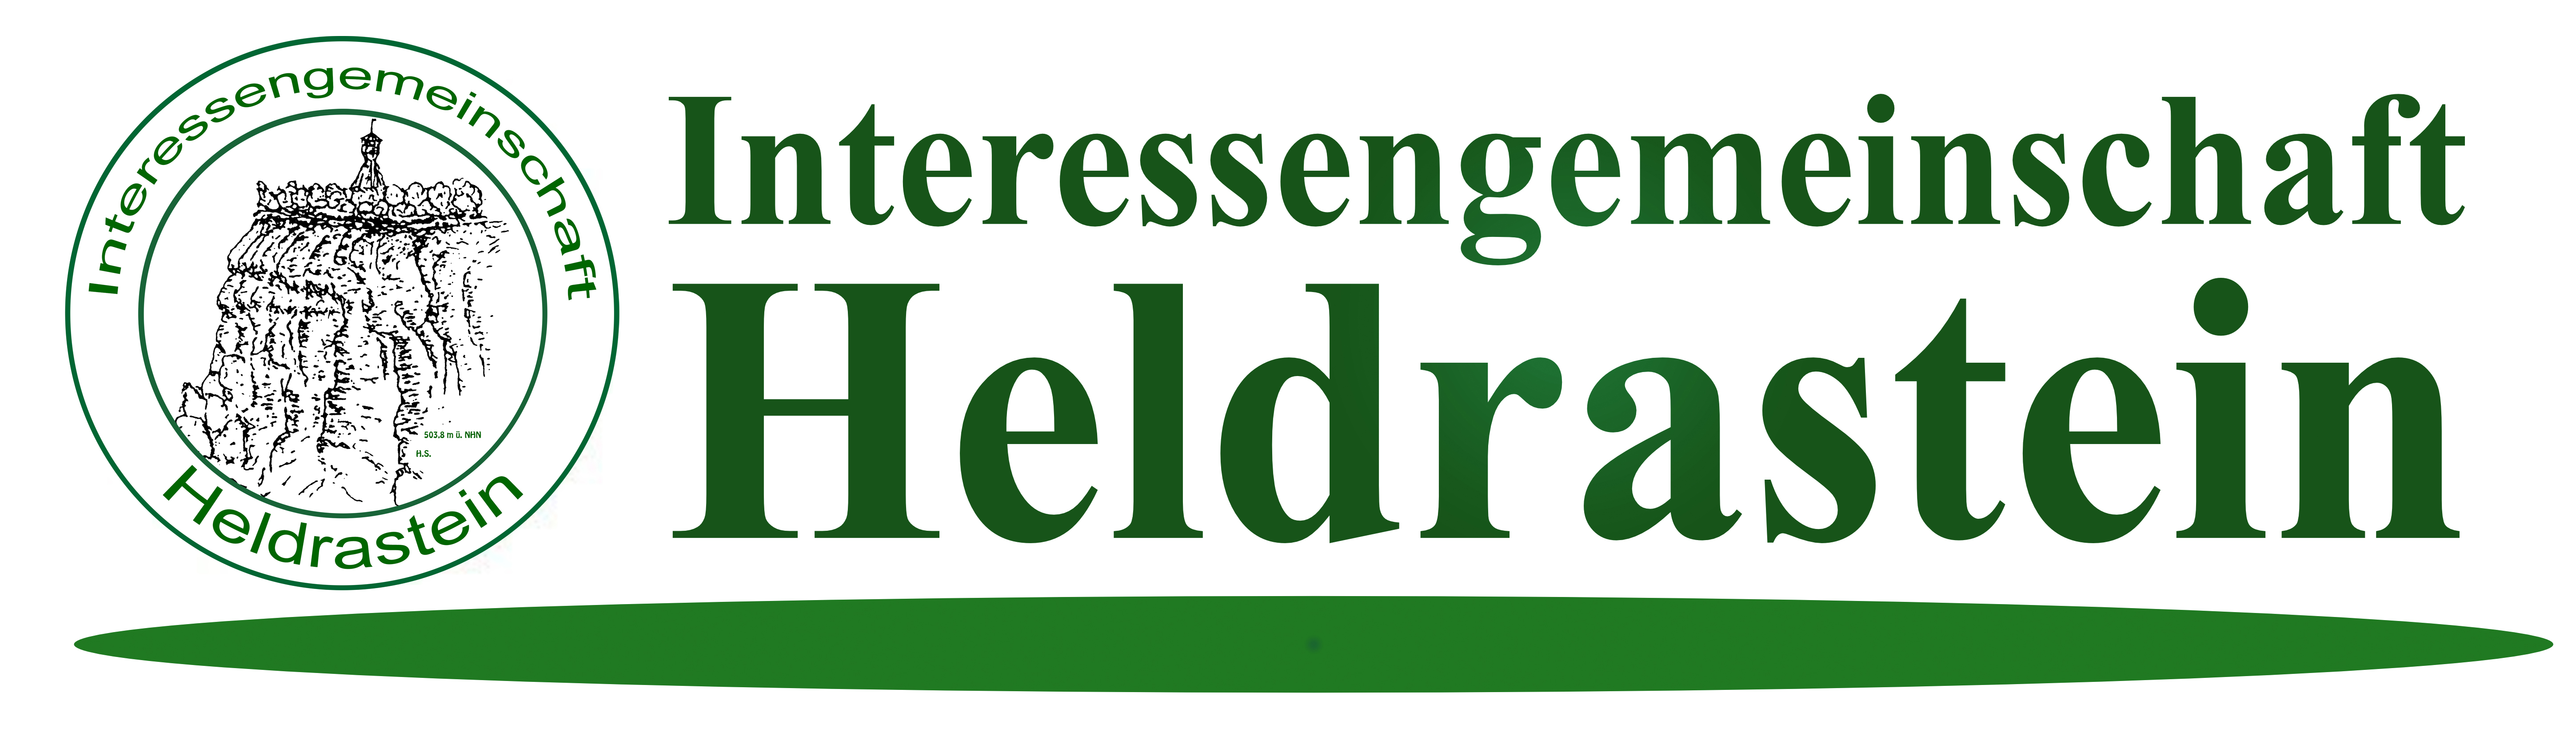 Interessengemeinschaft Heldrastein e.V.